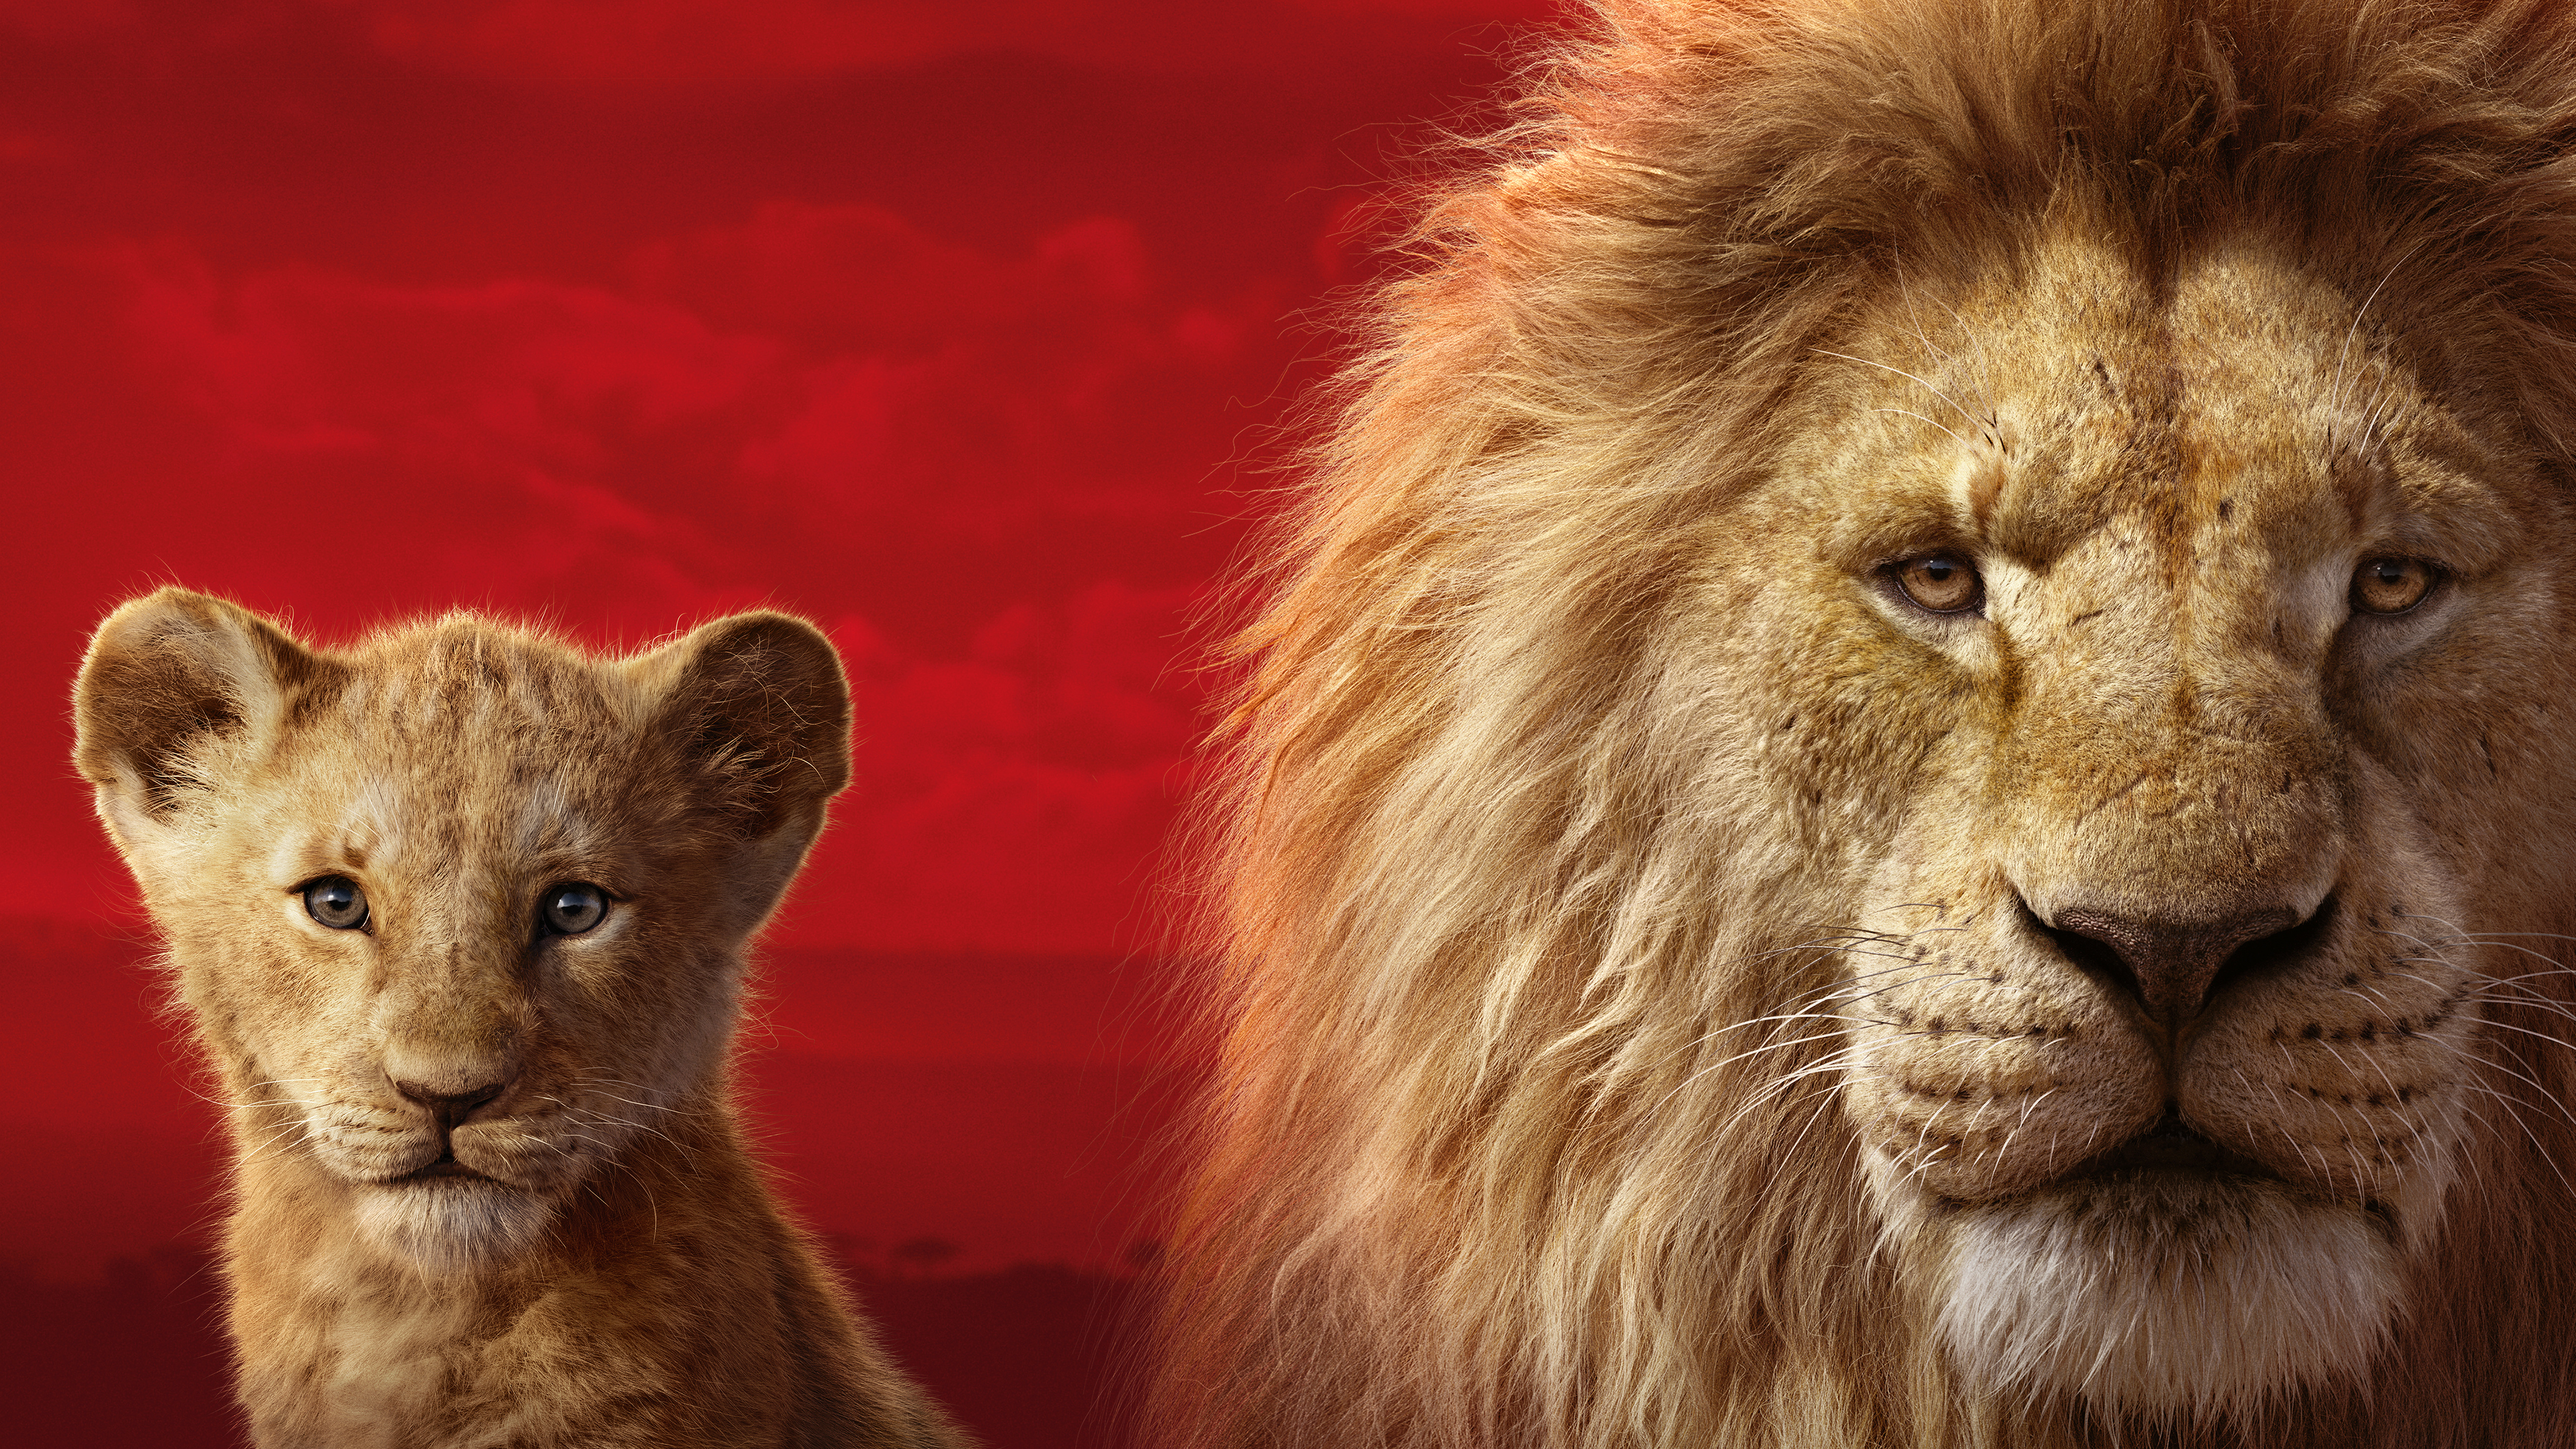 the lion king (2019), movie, simba